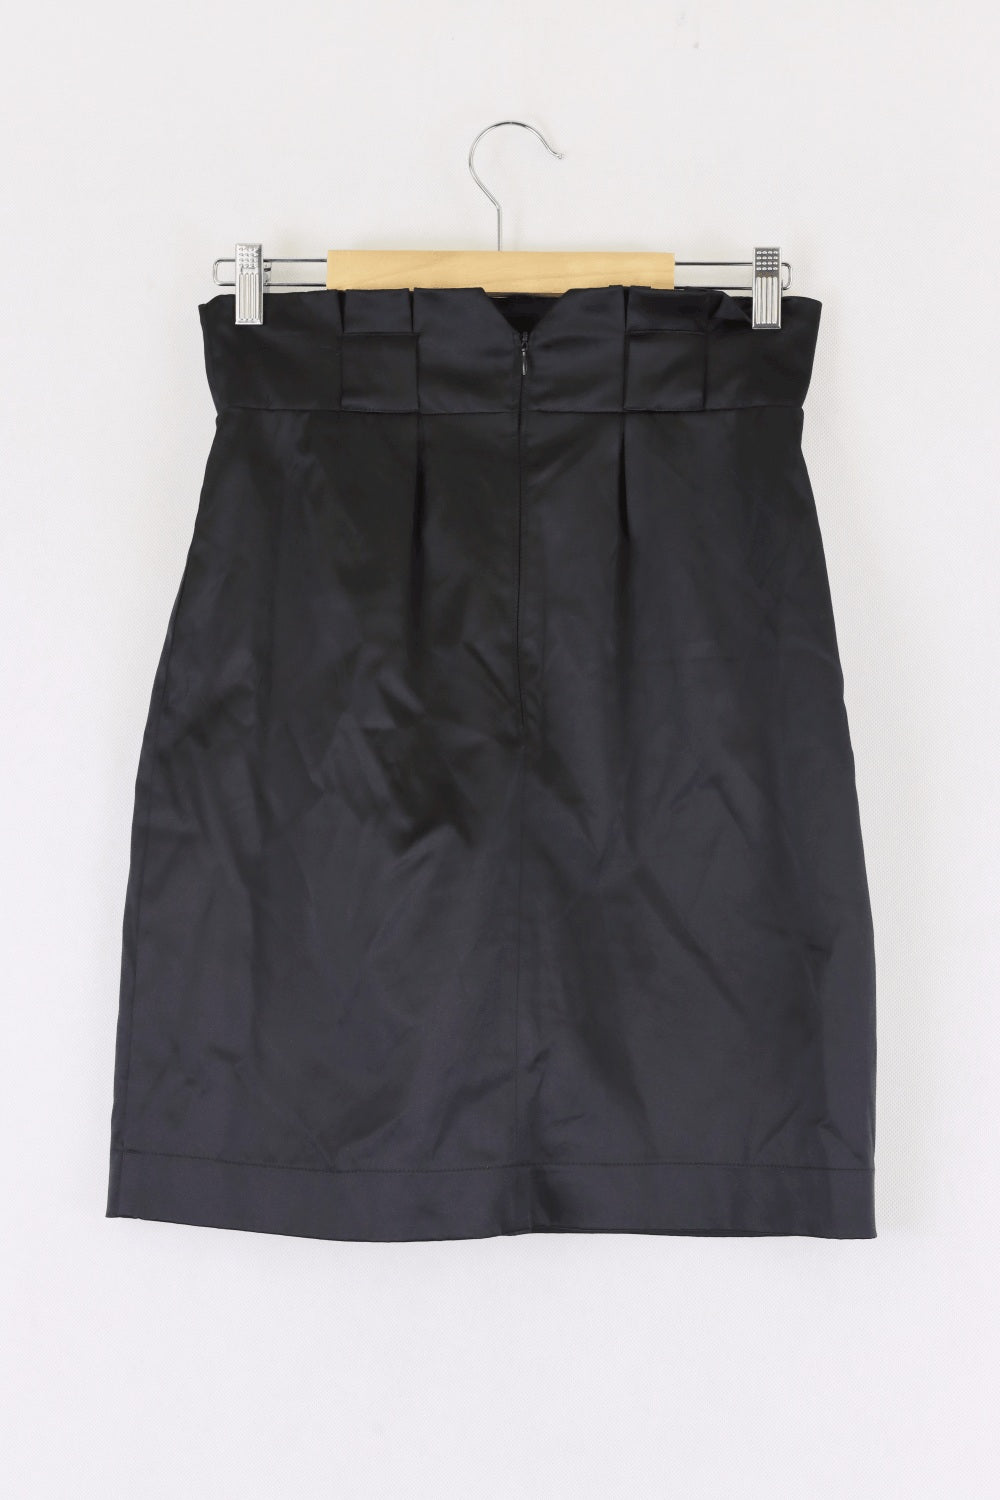 Ef Collection Black Skirt M